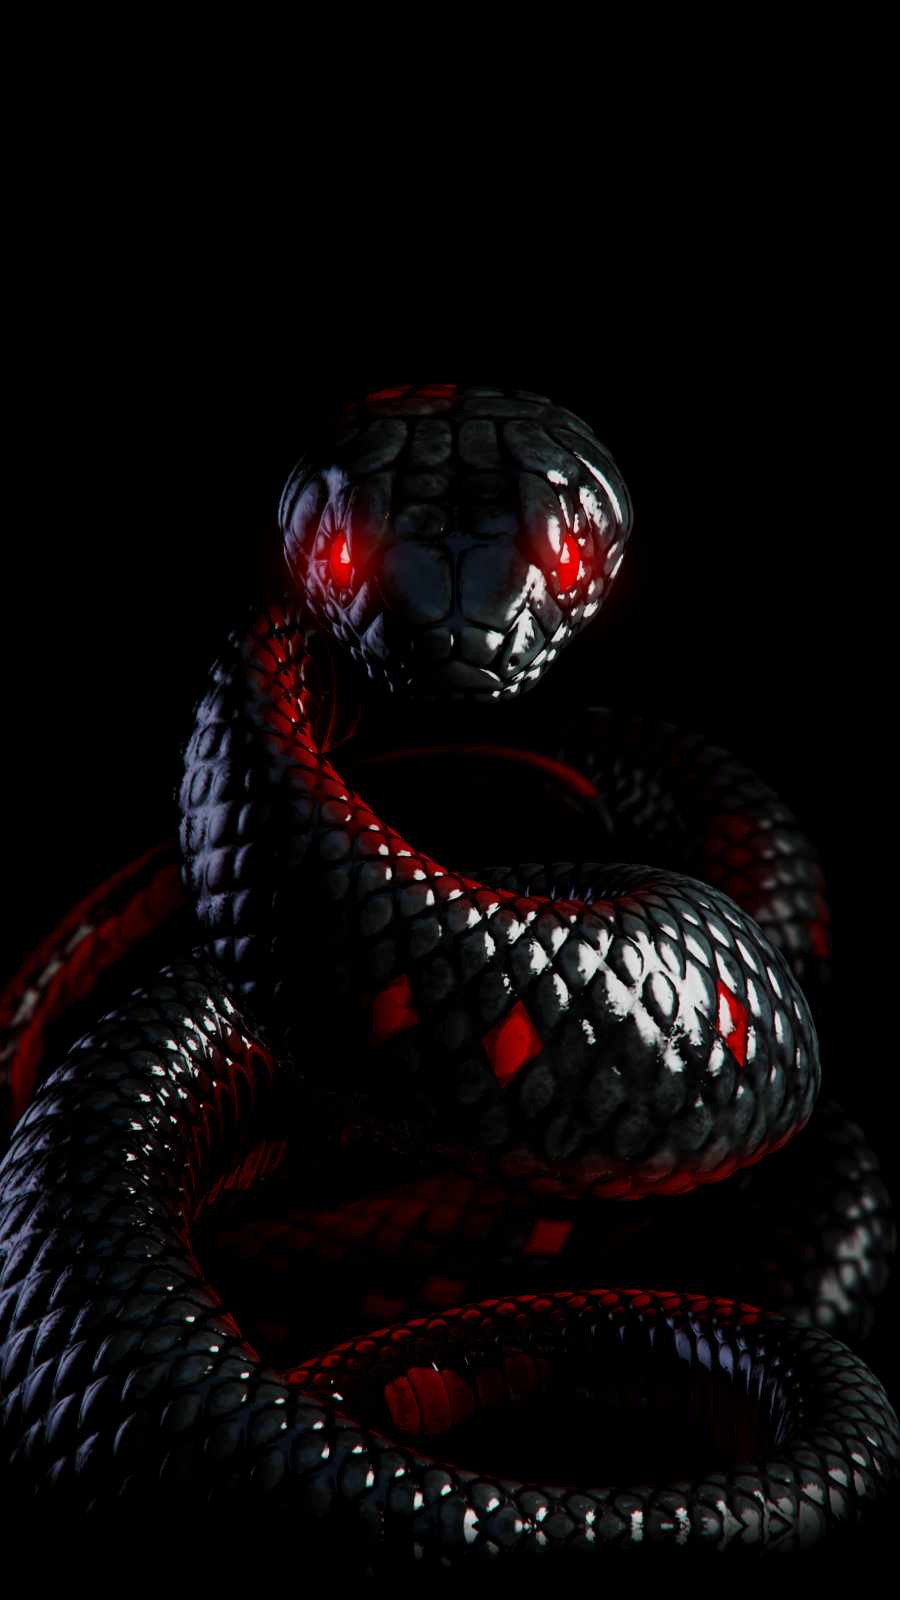 Black Snake iPhone Wallpaper